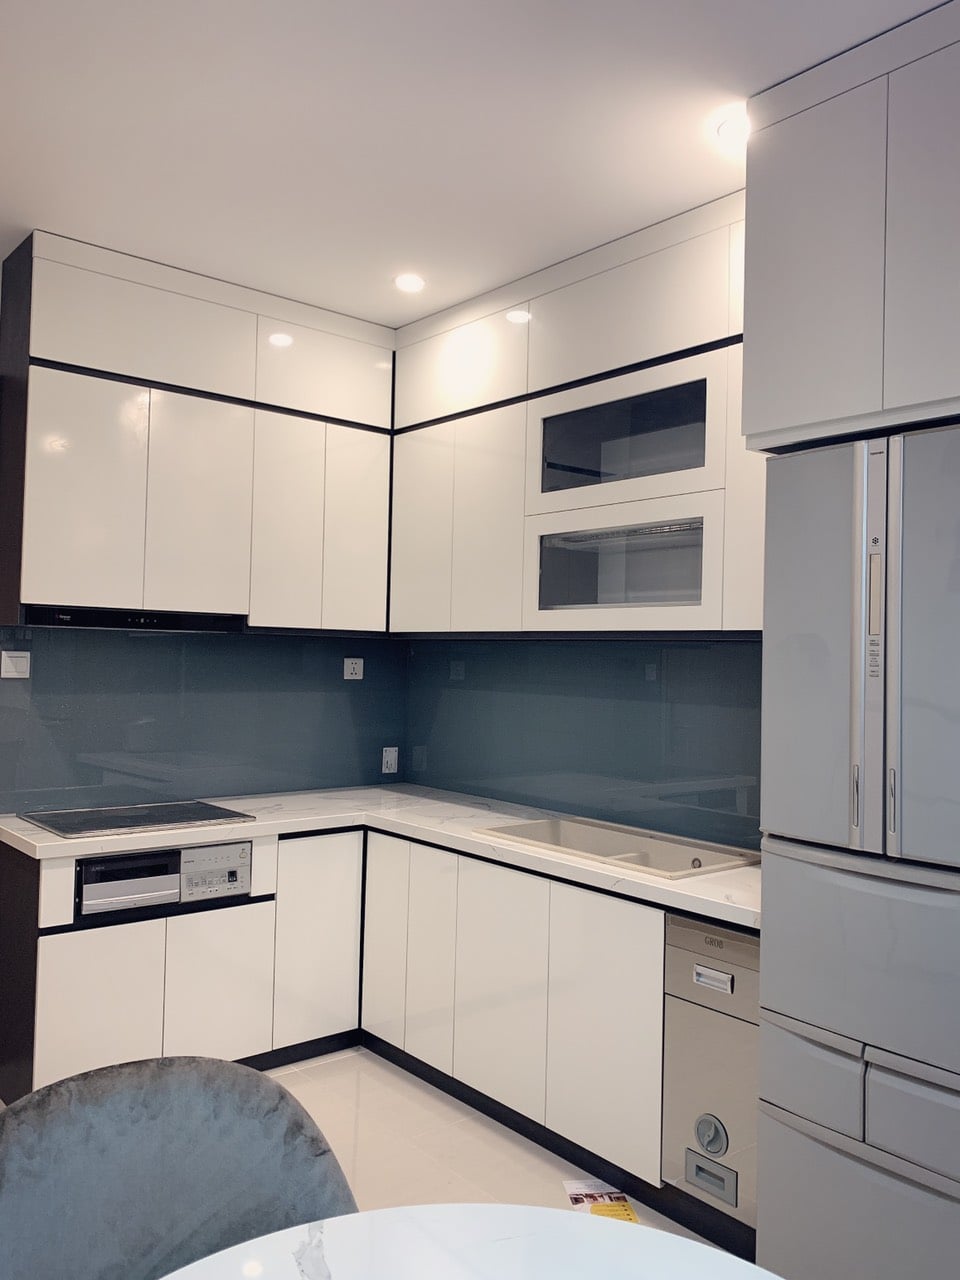 2 Bedroom Apartment For Rent in Vinhomes Ocean Park S2.12 55M2